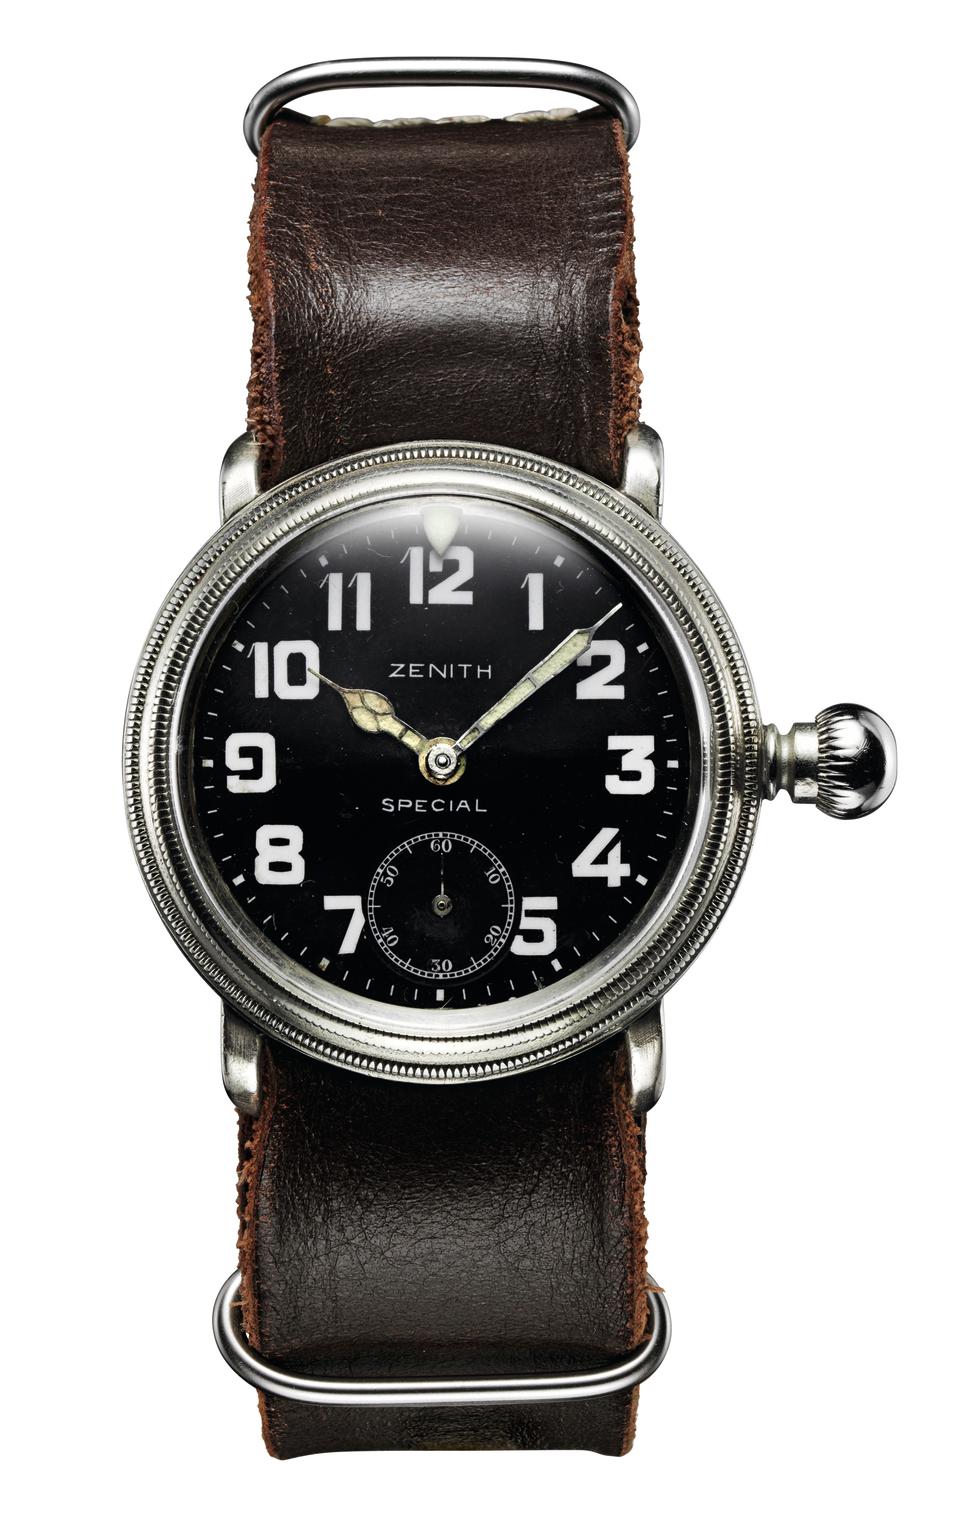 Zenith’s Pilot Wristwatch (1928-1930s)